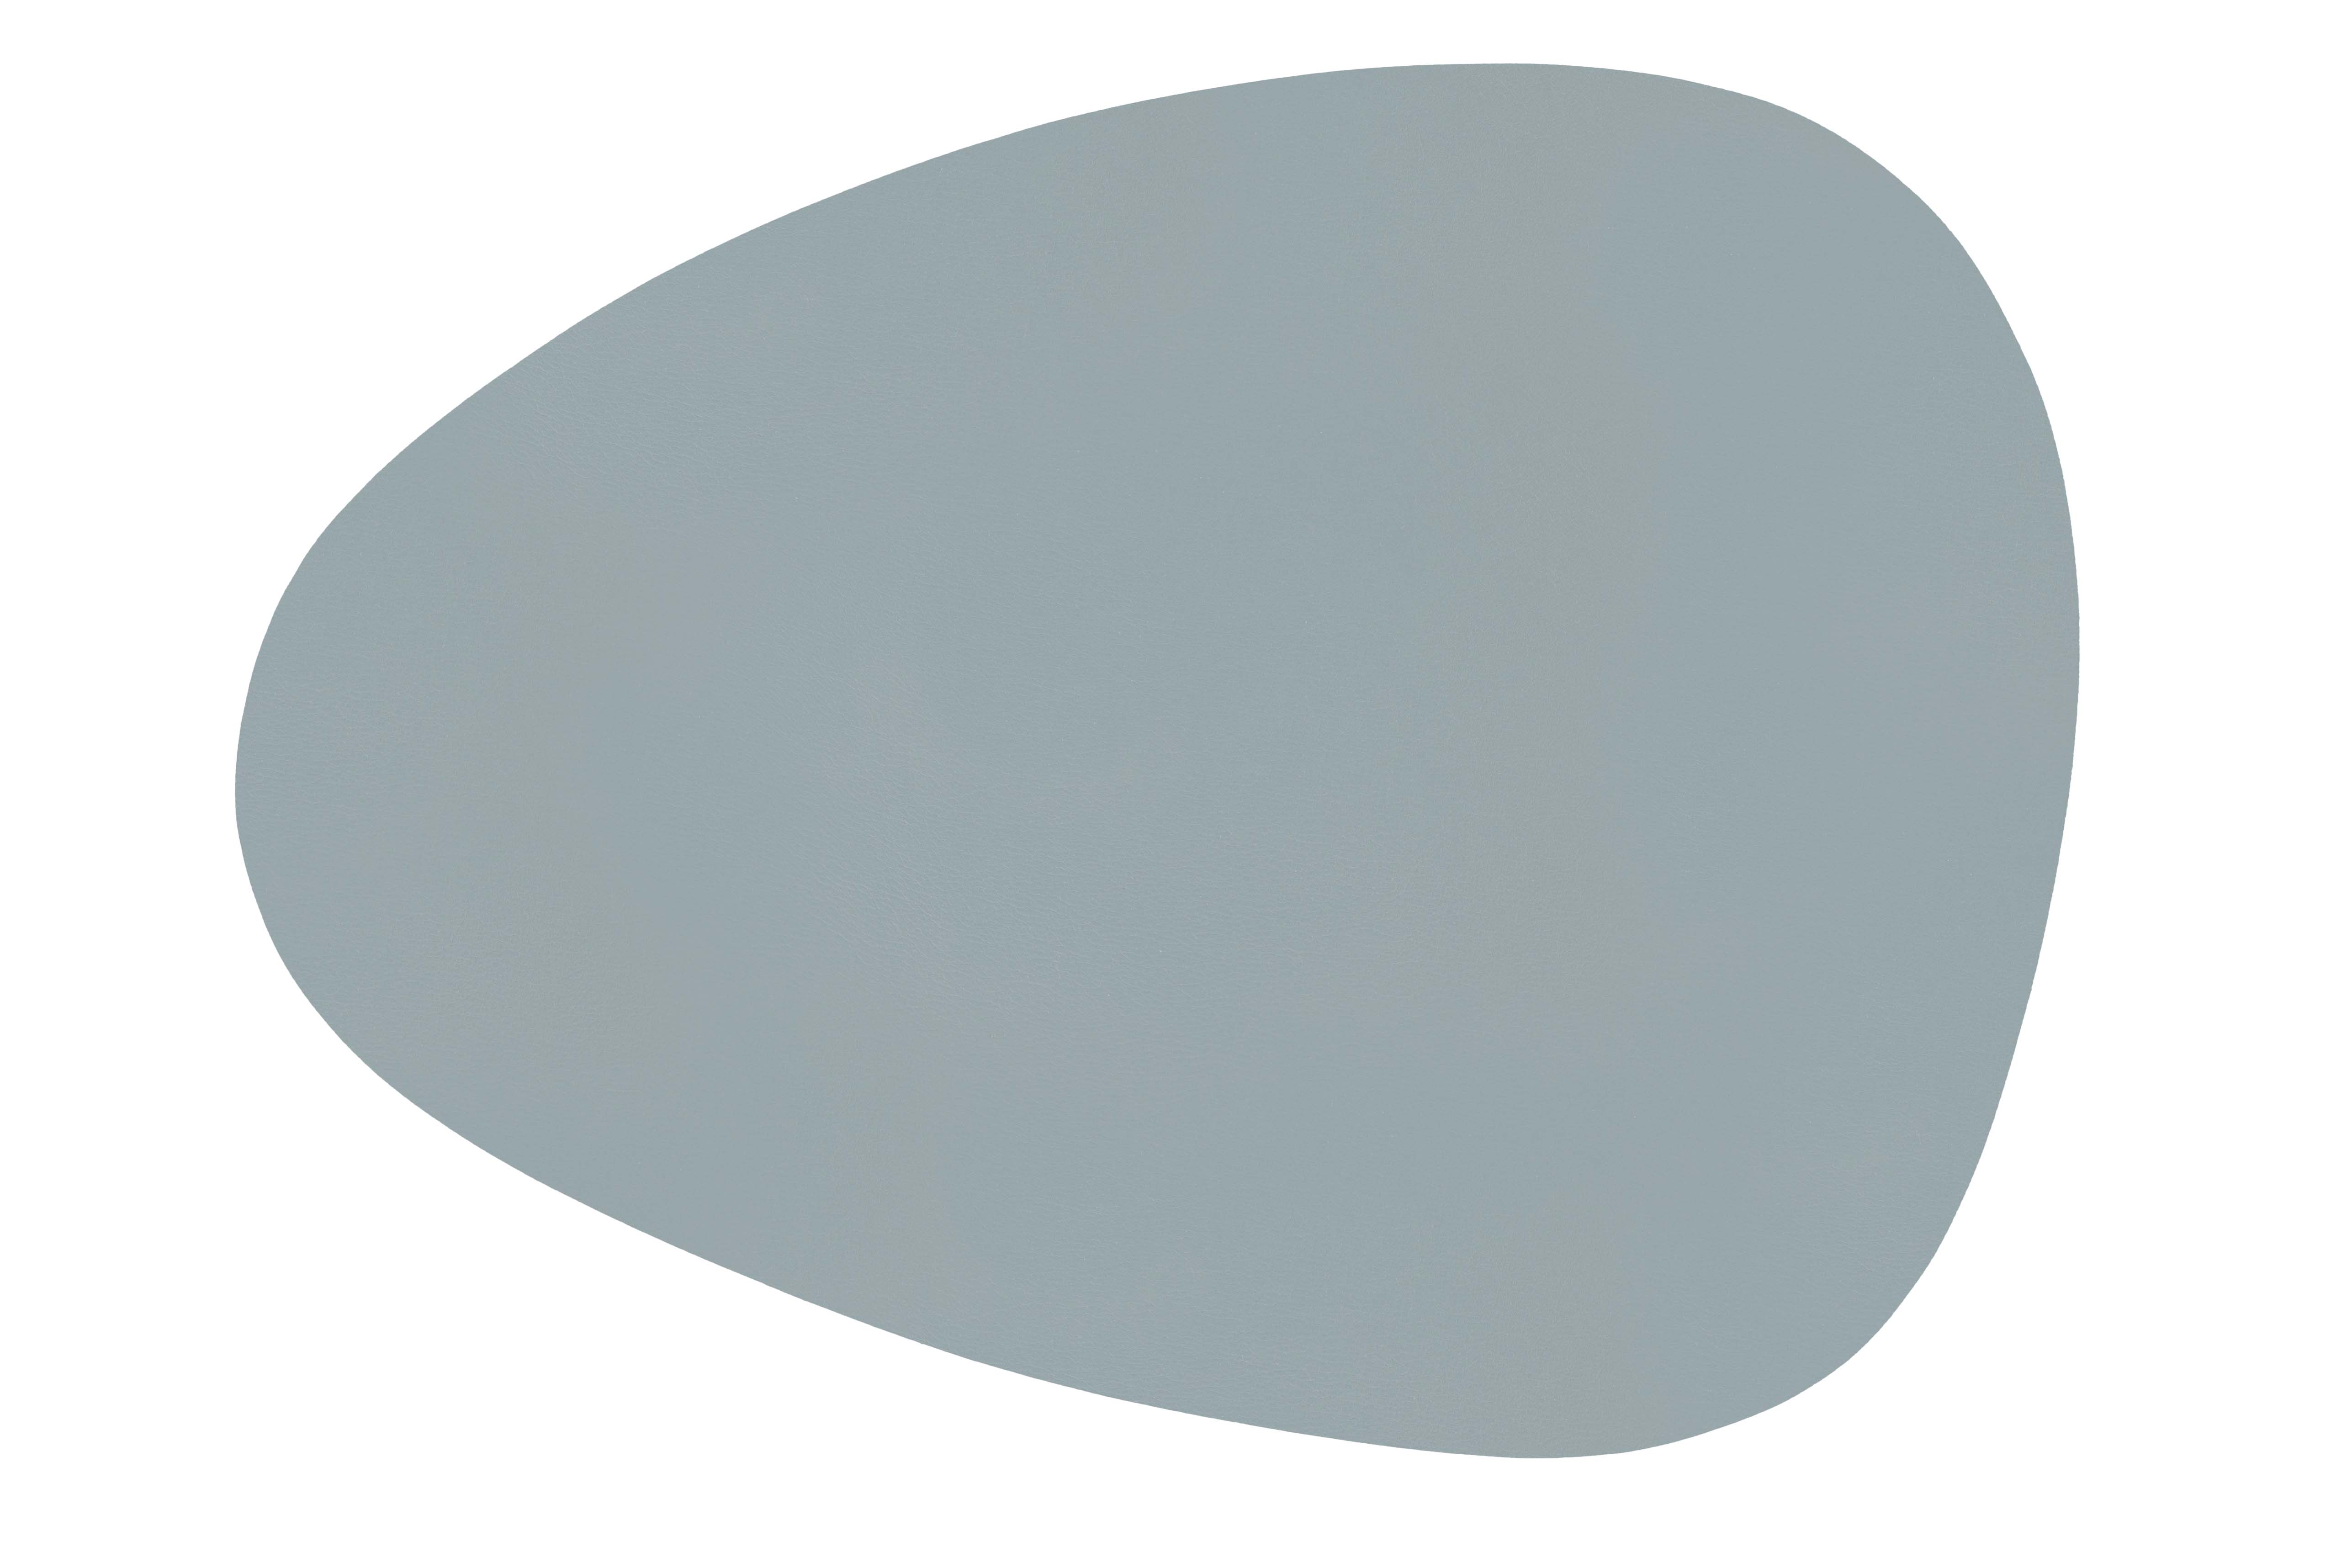 Placemat STONE - TOGO - 43x32cm, stone blue